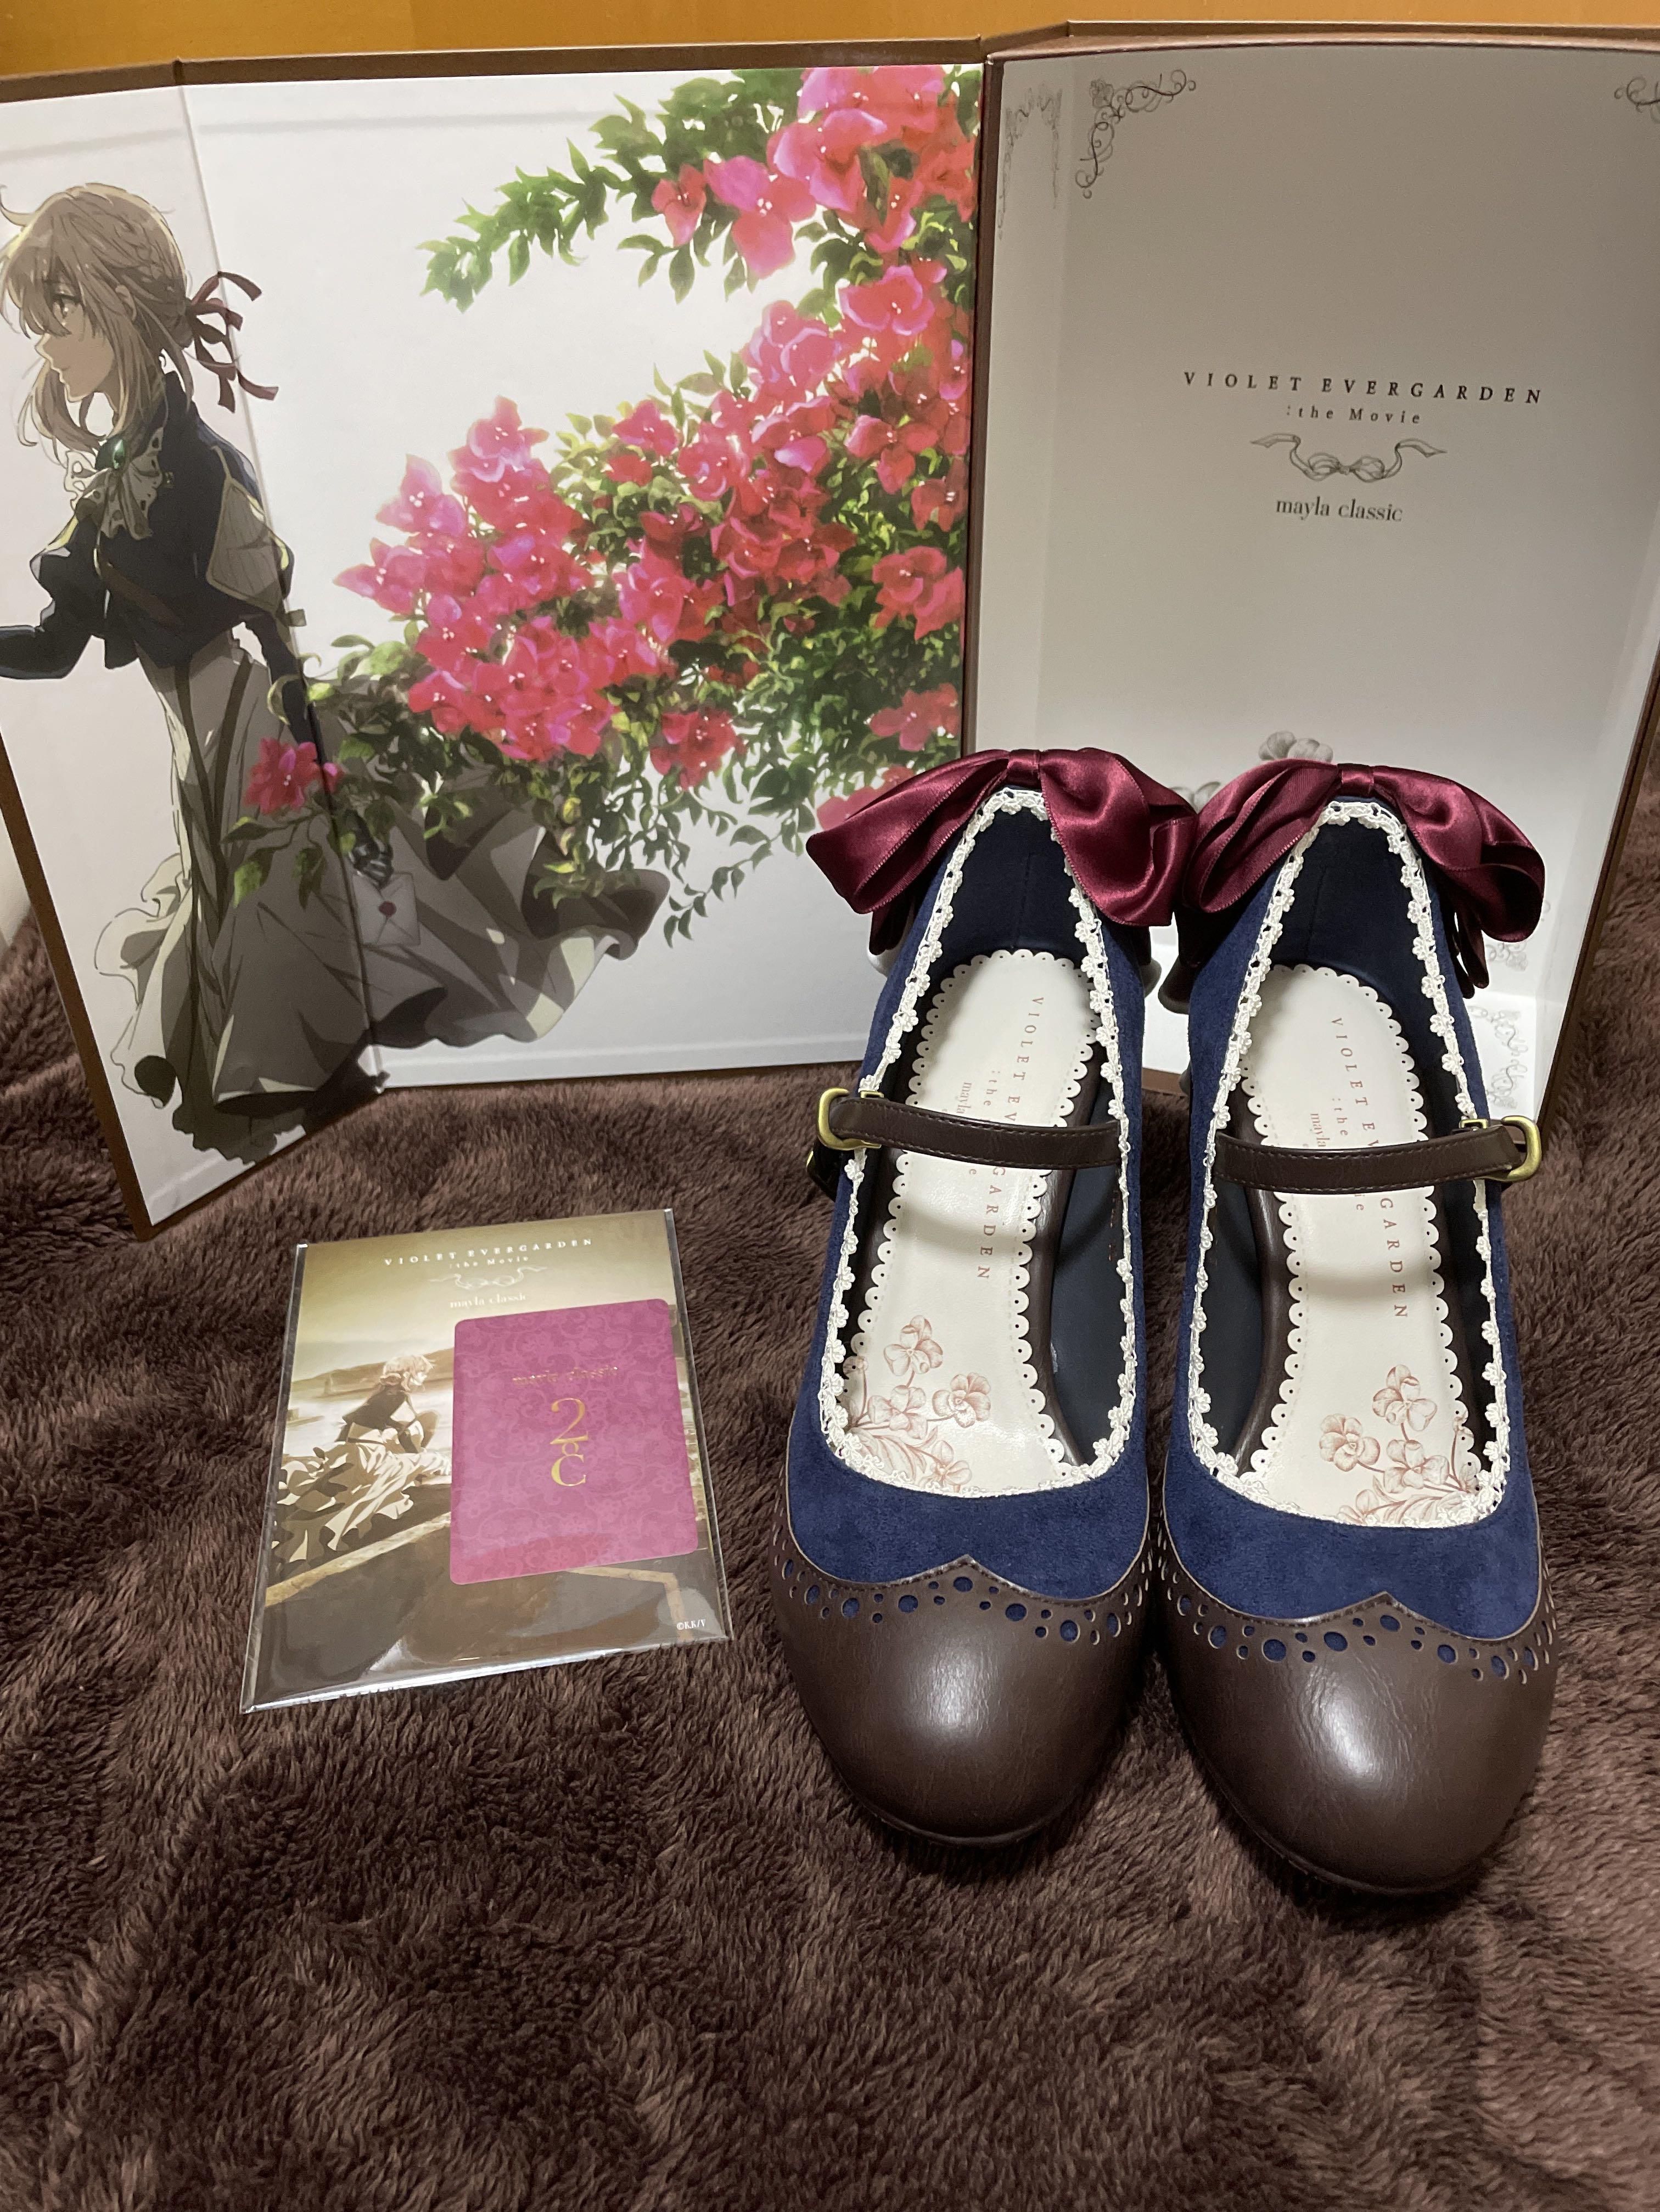 mayla classic 紫羅蘭永恆花園Violet Evergarden 高跟鞋, 女裝, 鞋